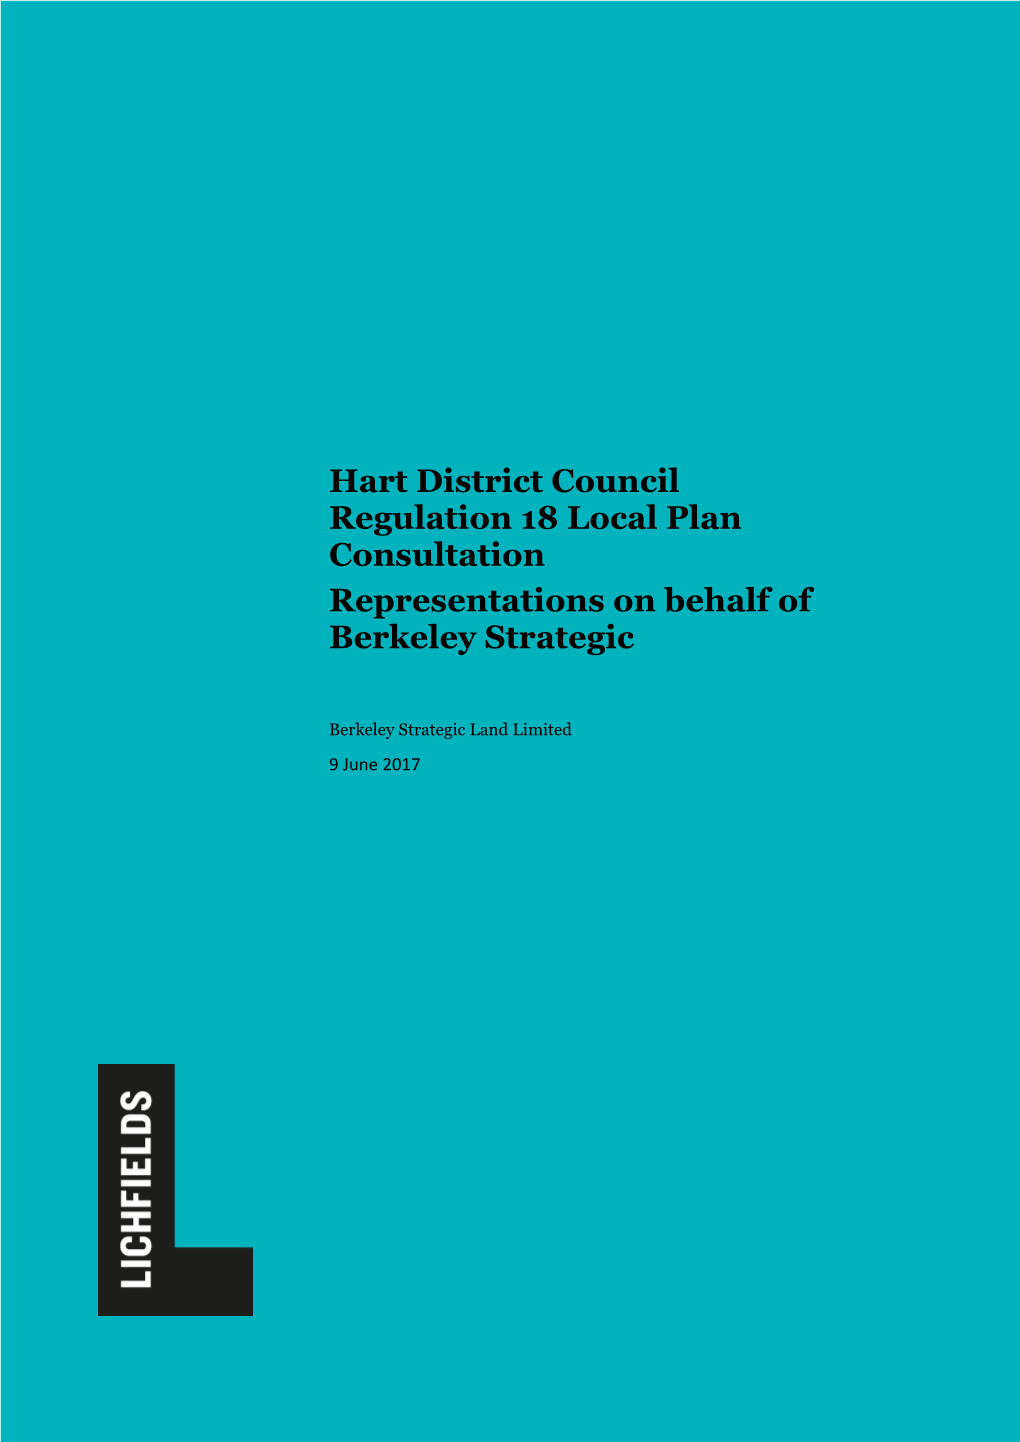 Hart District Council Regulation 18 Local Plan Consultation Representations on Behalf of Berkeley Strategic